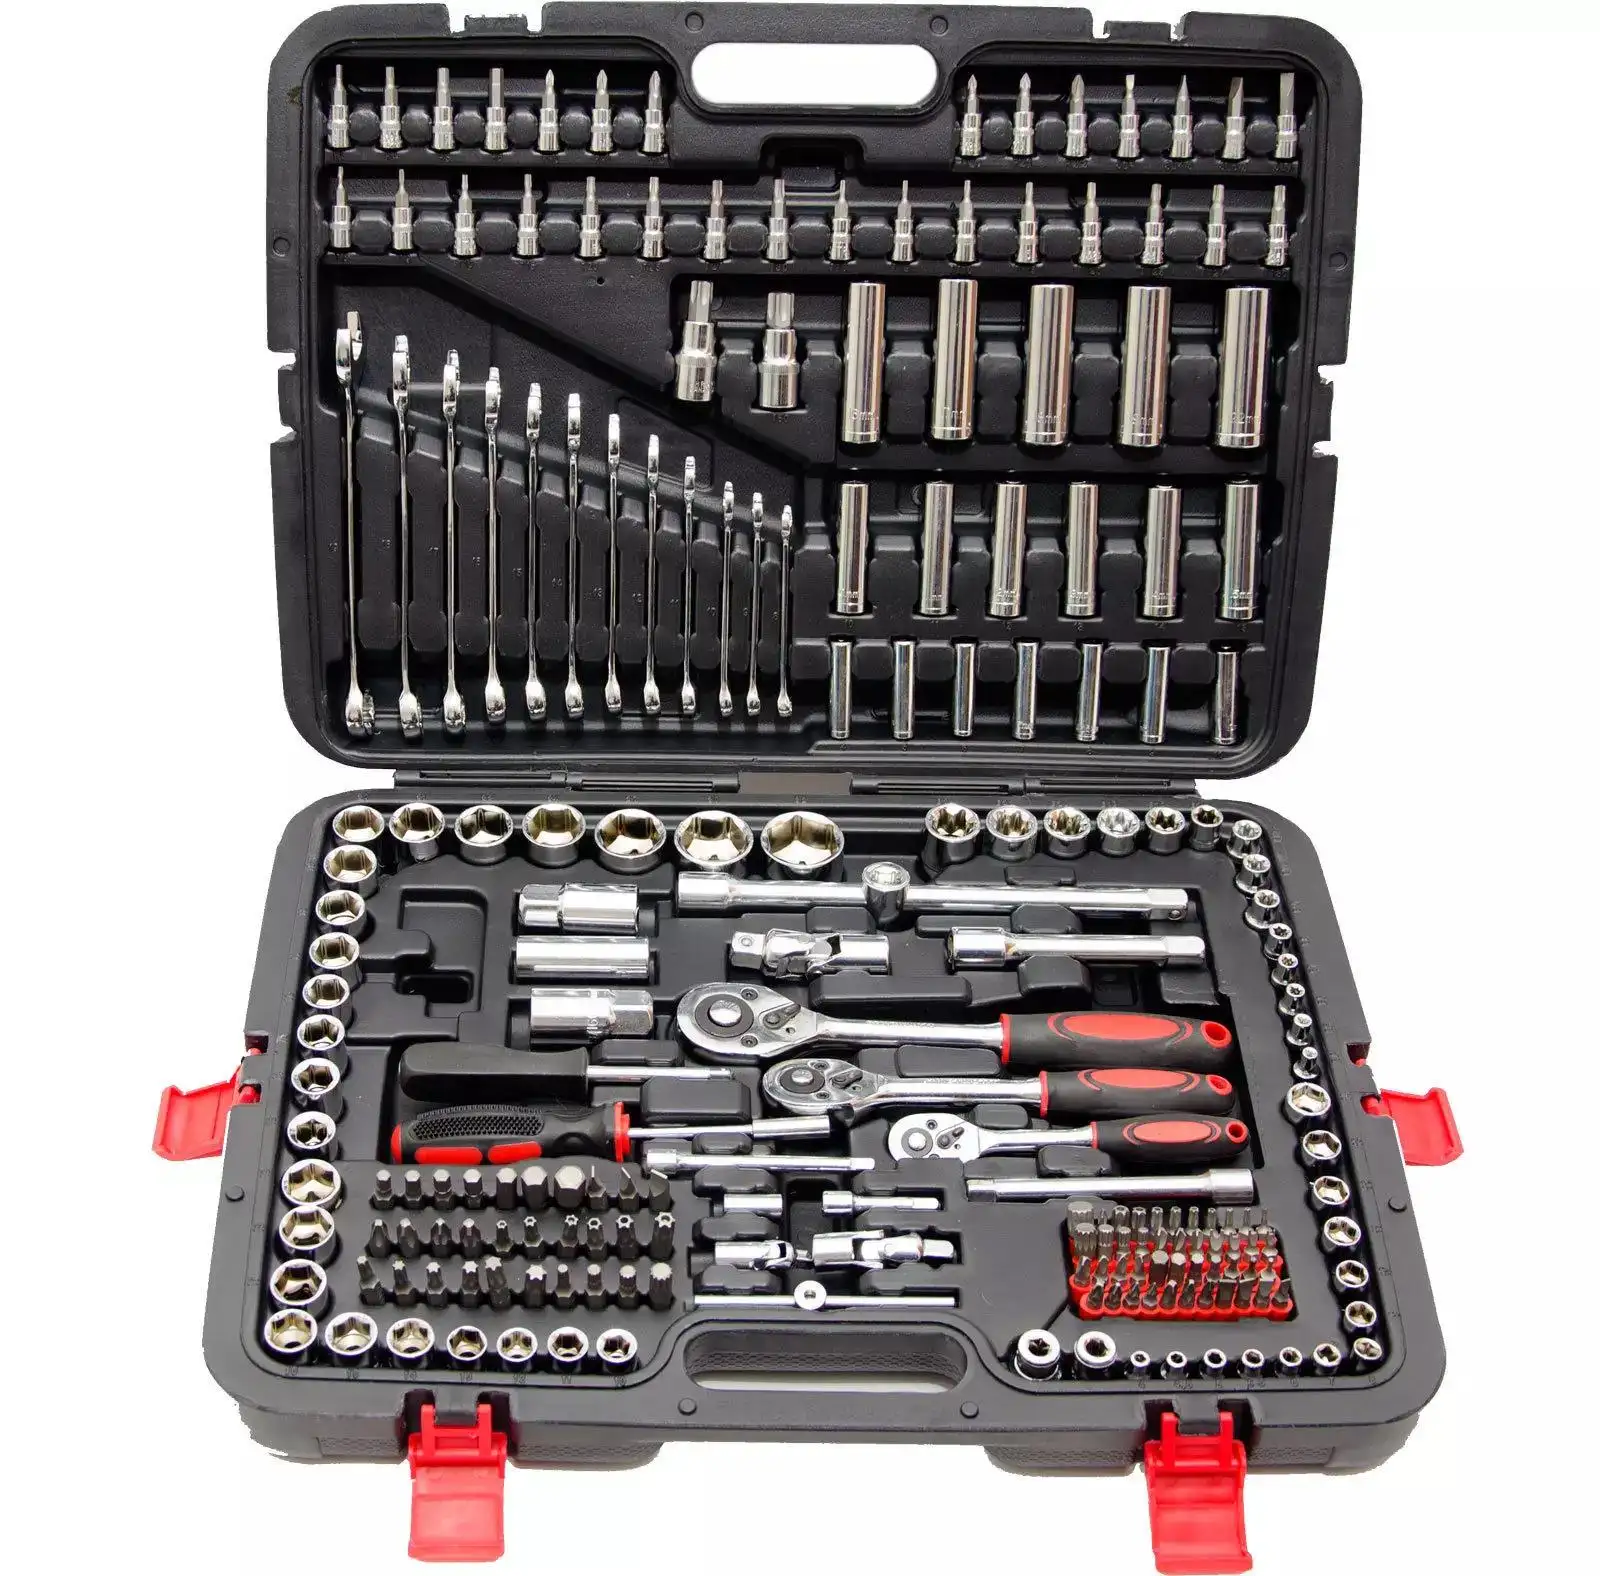 oem provider wholesale 215pcs 1/4" 3/8"&1/2" professional hand socket tool sets for mechanics in workshop and garage